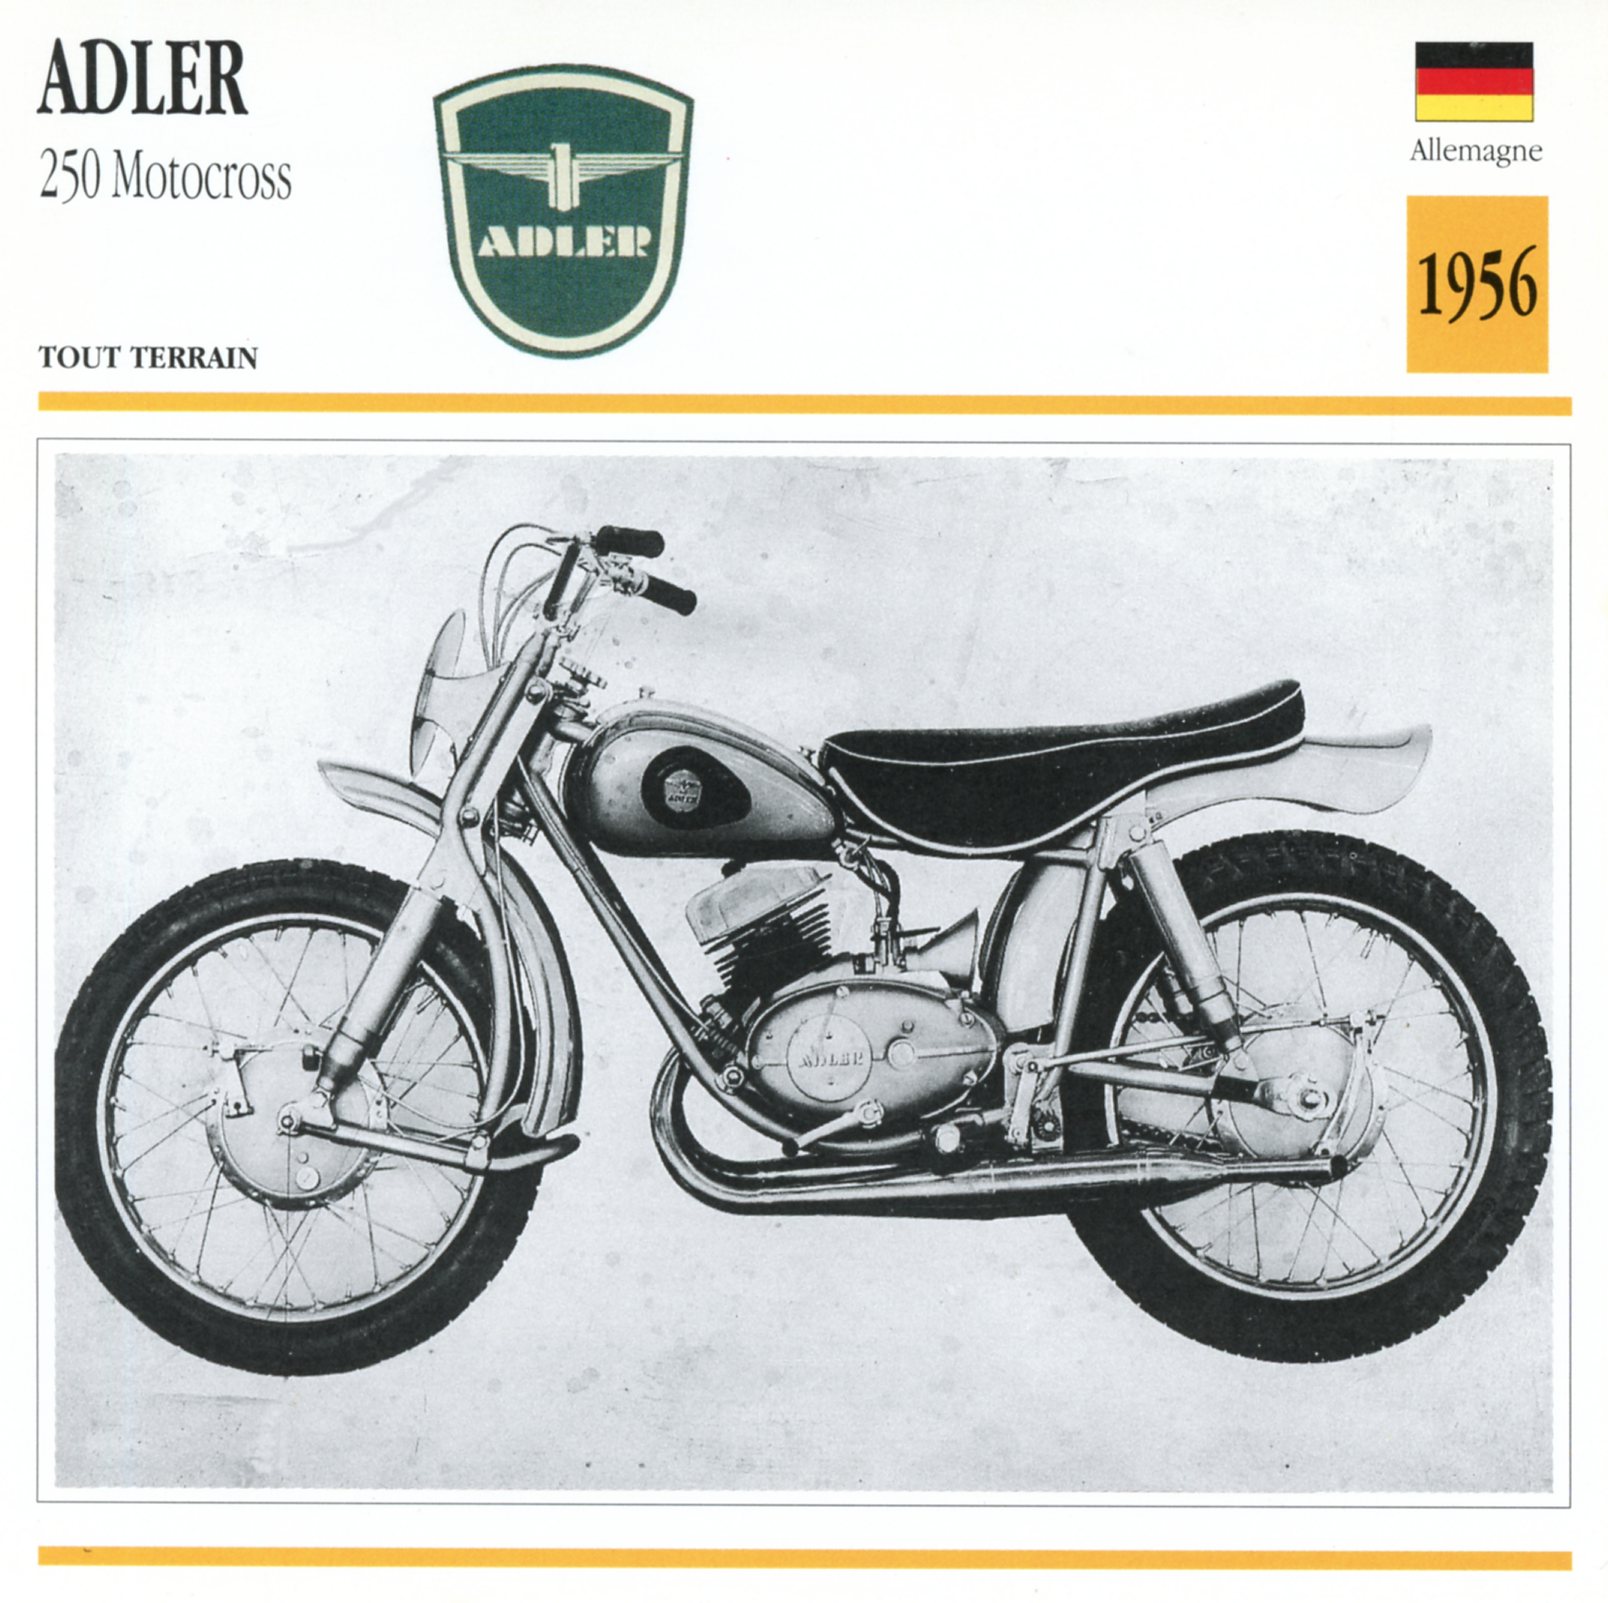 ADLER 250 MOTOCROSS 1956 - CARTE CARD FICHE MOTO CARACTERISTIQUES